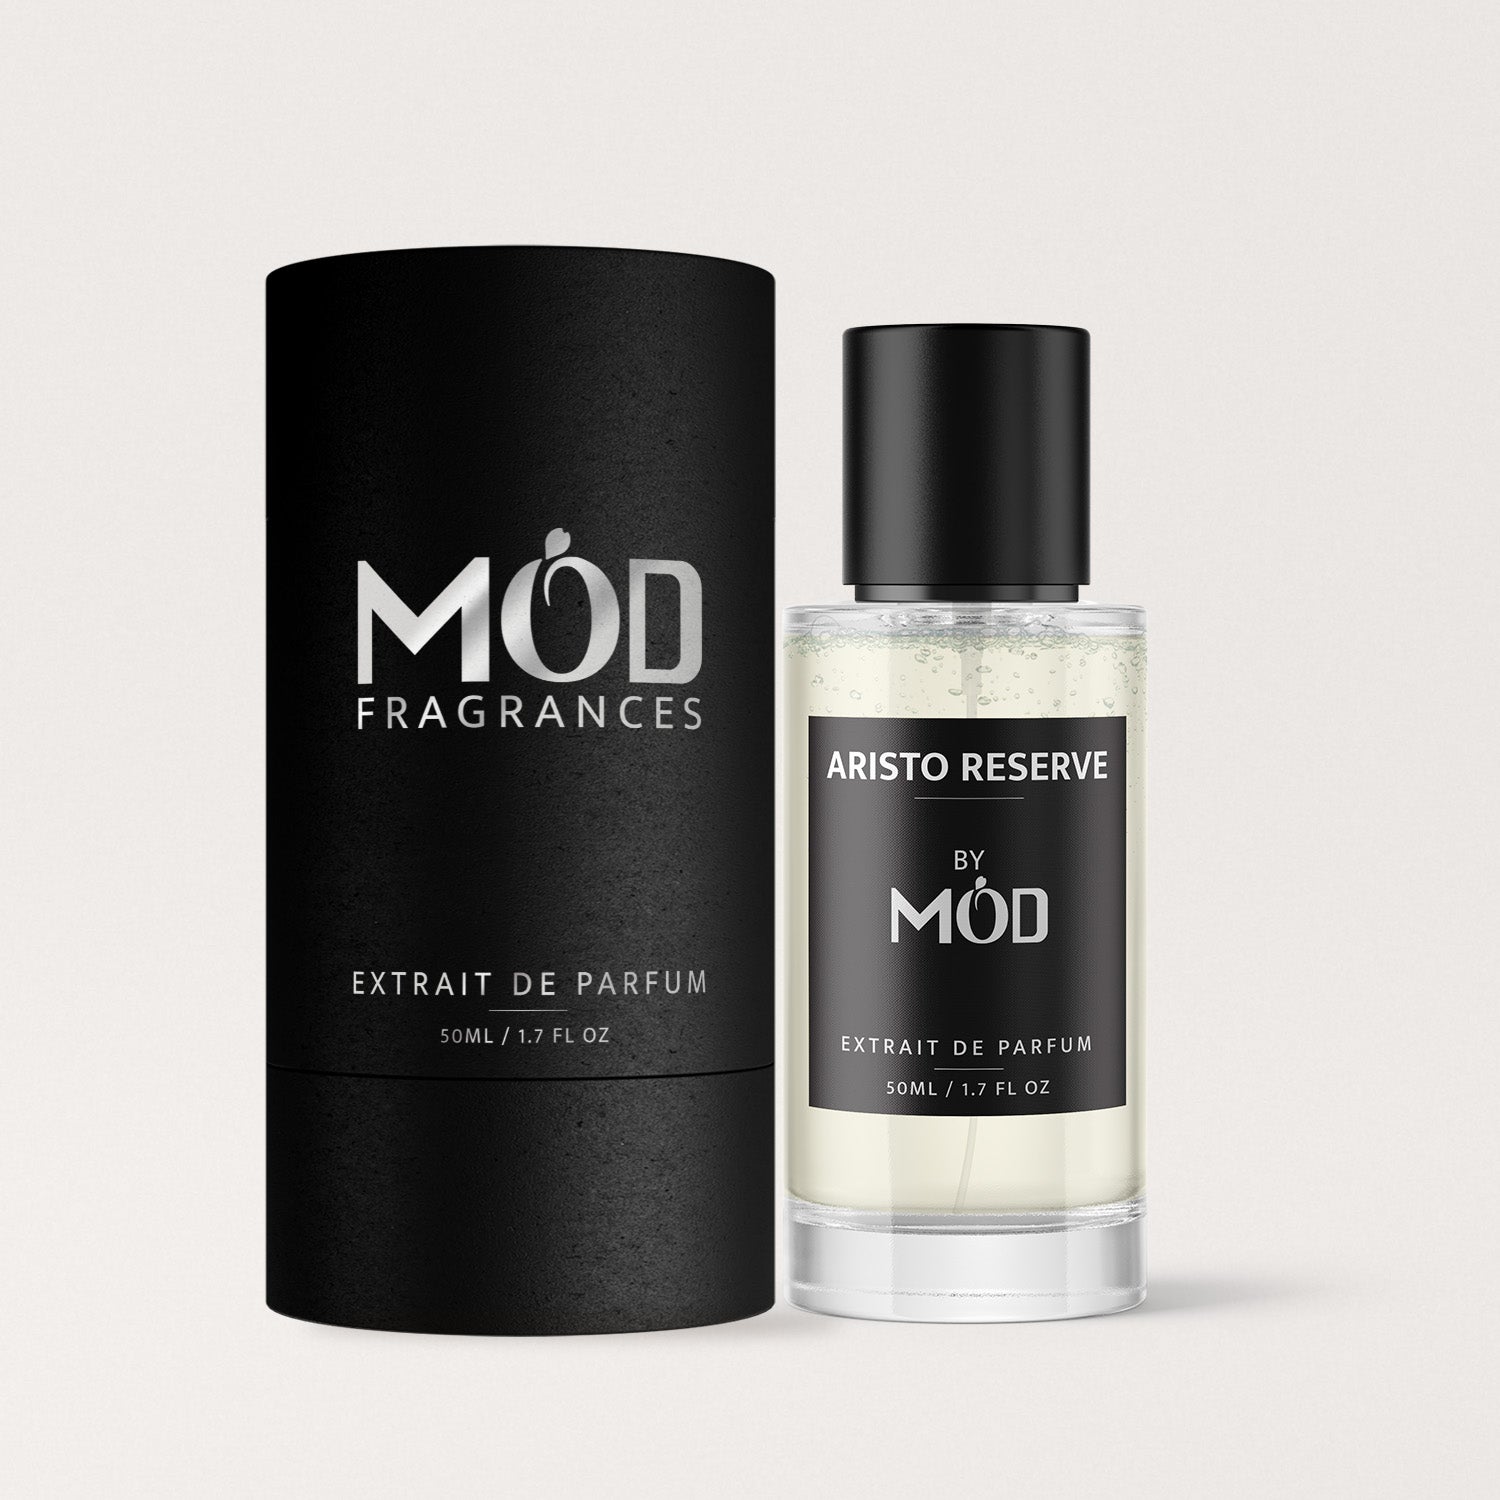 Aristo Reserve - Mod Fragrances